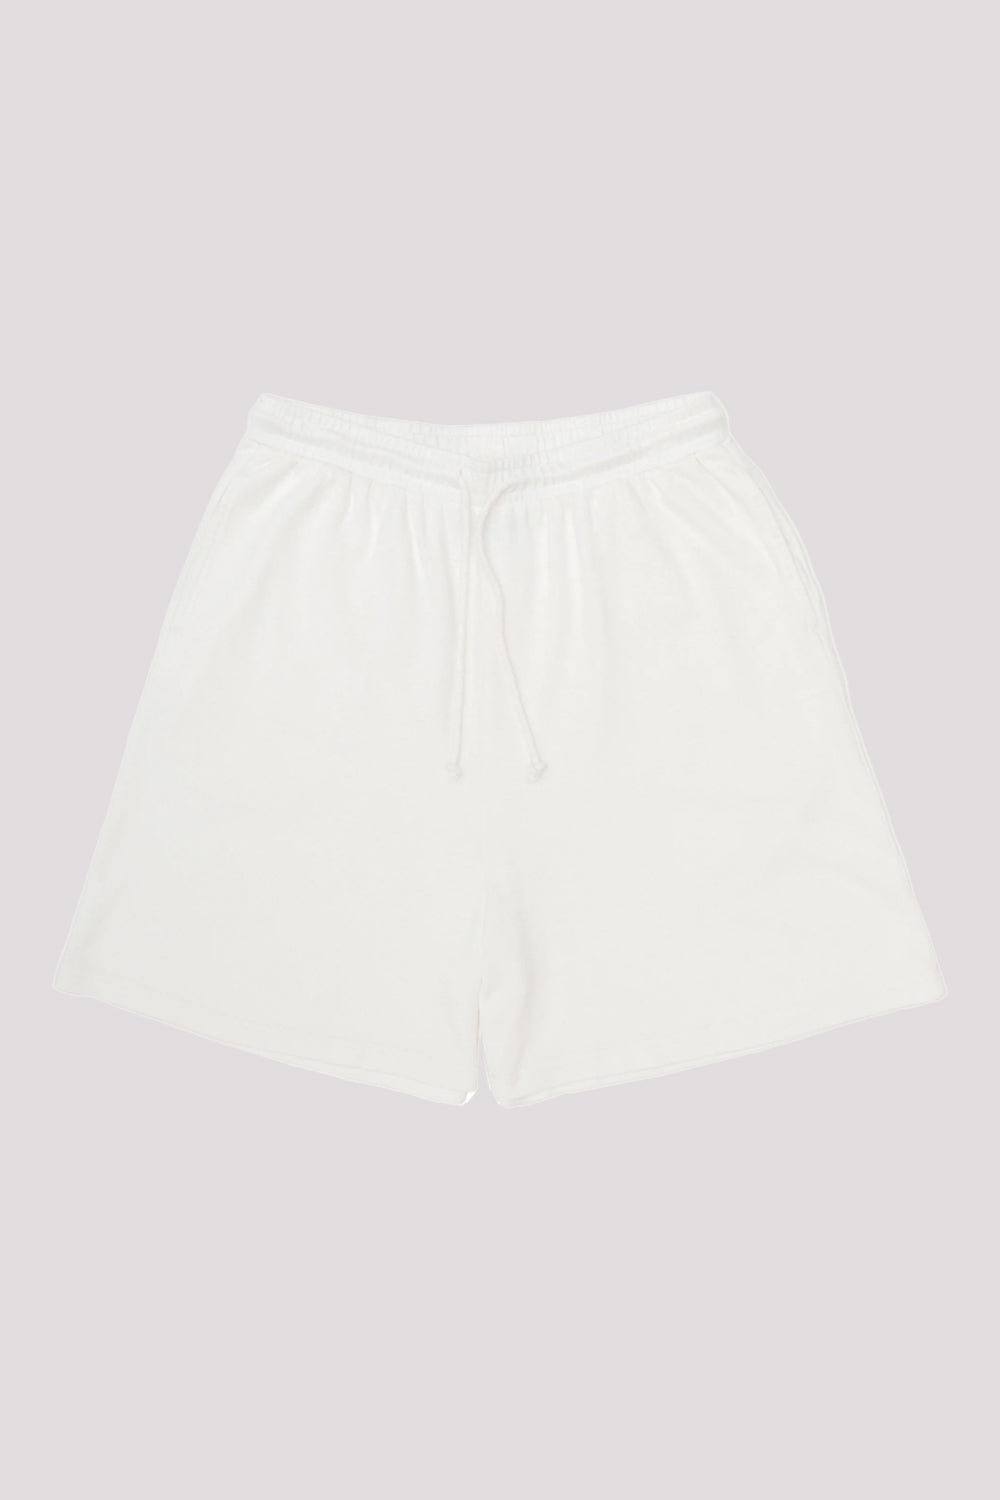 Tee Shorts | Off White | Stock NZ | BUDDY HEMP GOODS NZ | Black Box Boutique Auckland | Womens Fashion NZ